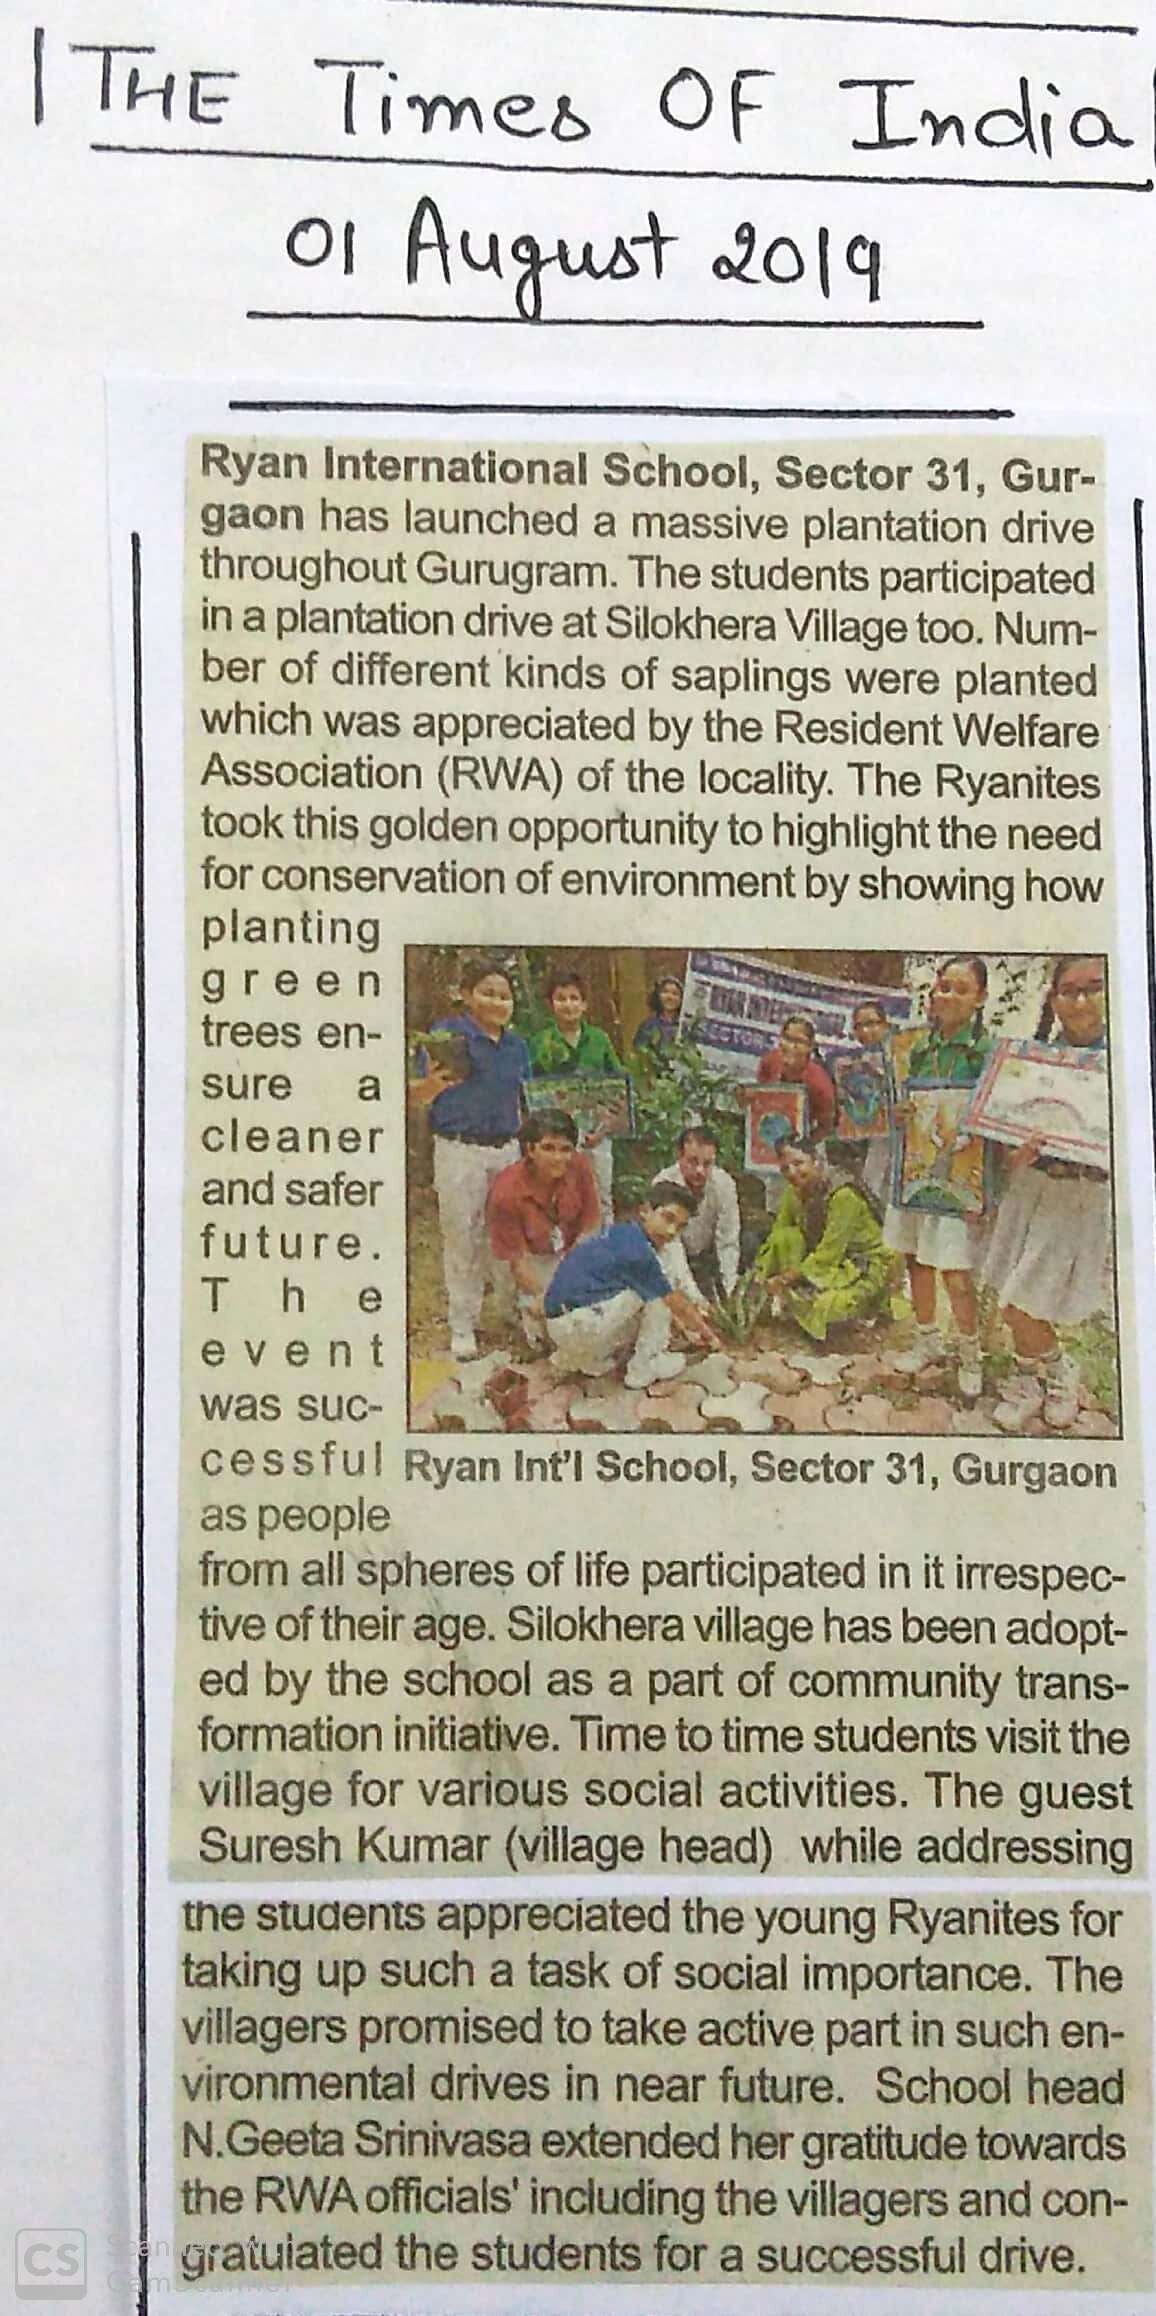 Launched a massive plantation drive throughout Gurugram - Ryan International School, Sec 31 Gurgaon